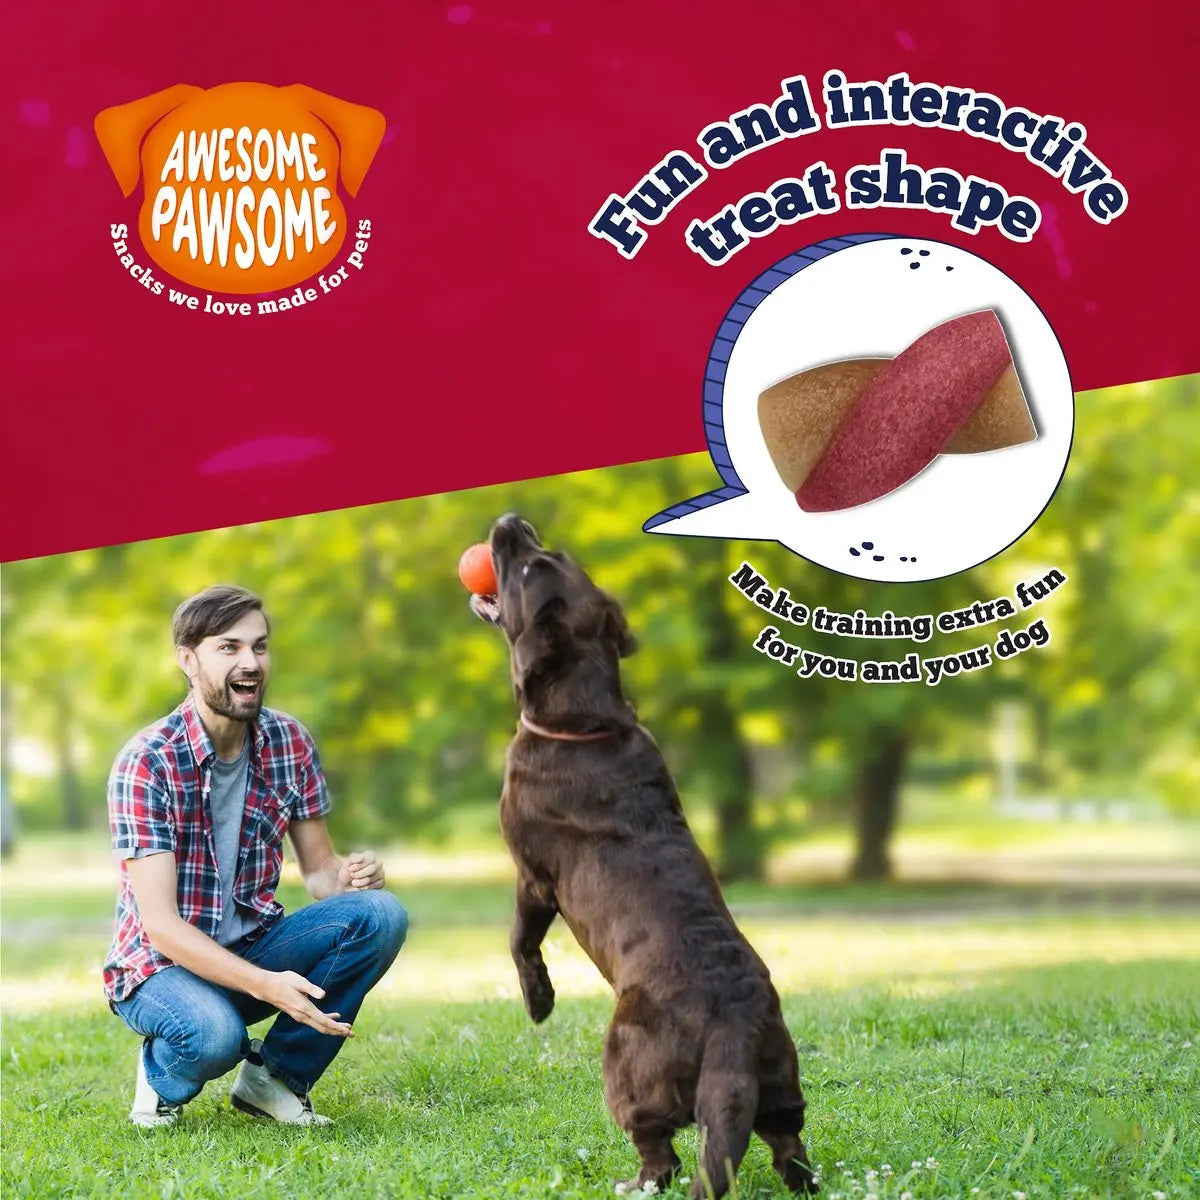 Awesome Pawsome Peanut Butter & Cranberry Dog Treats 3oz Awesome Pawsome